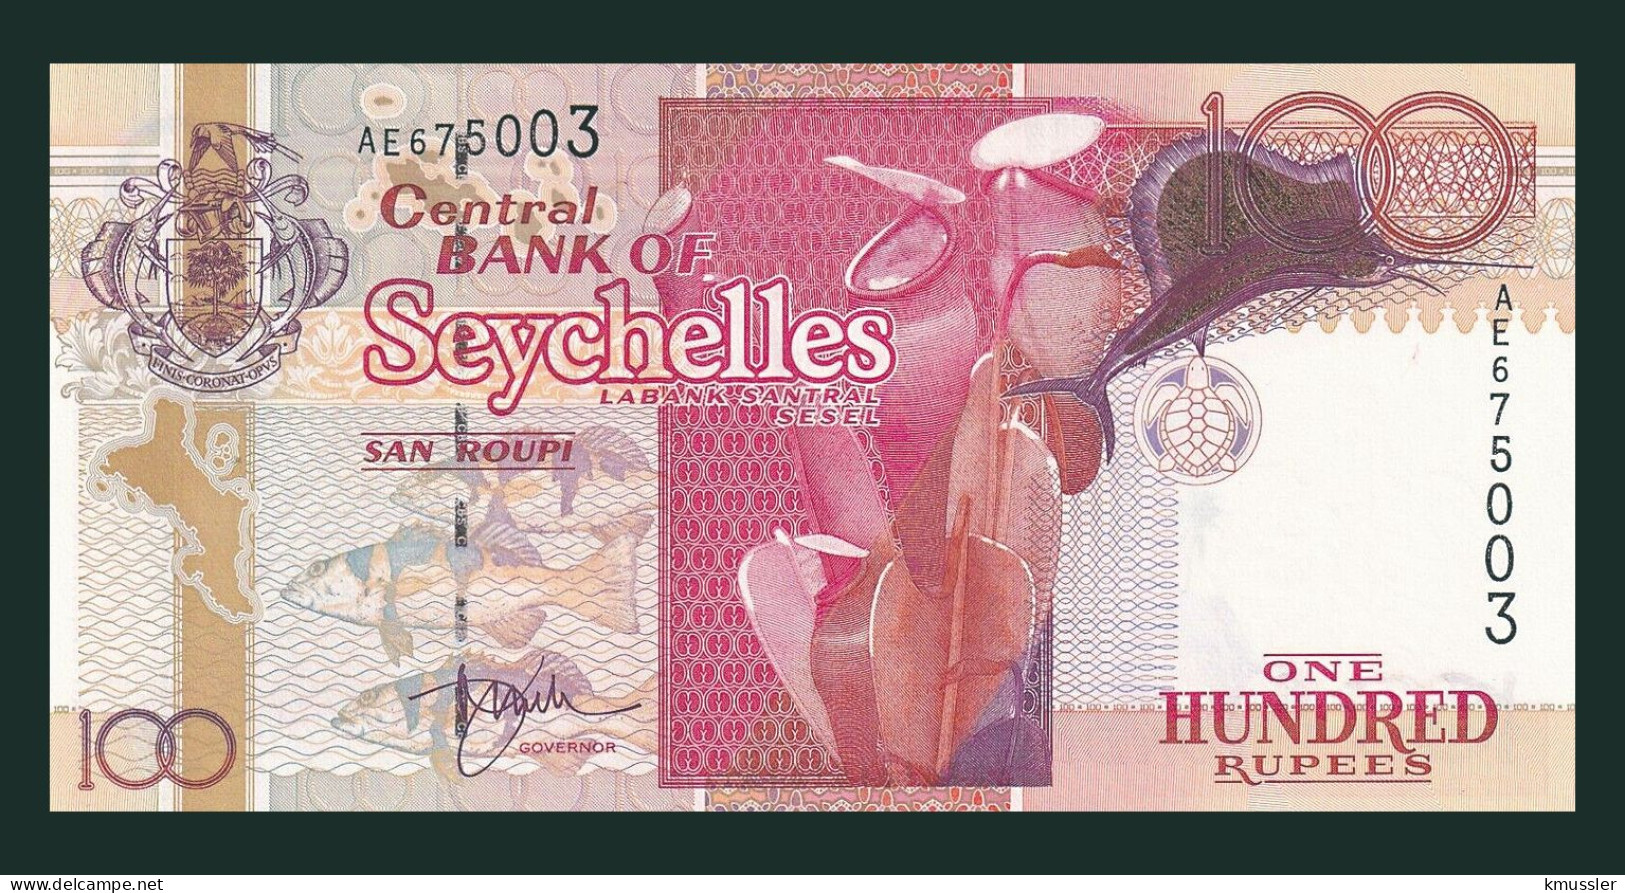 # # # Banknote Seychellen (Seychelles) Central Bank 100 Rupees 2001 (P-40) UNC # # # - Seychellen